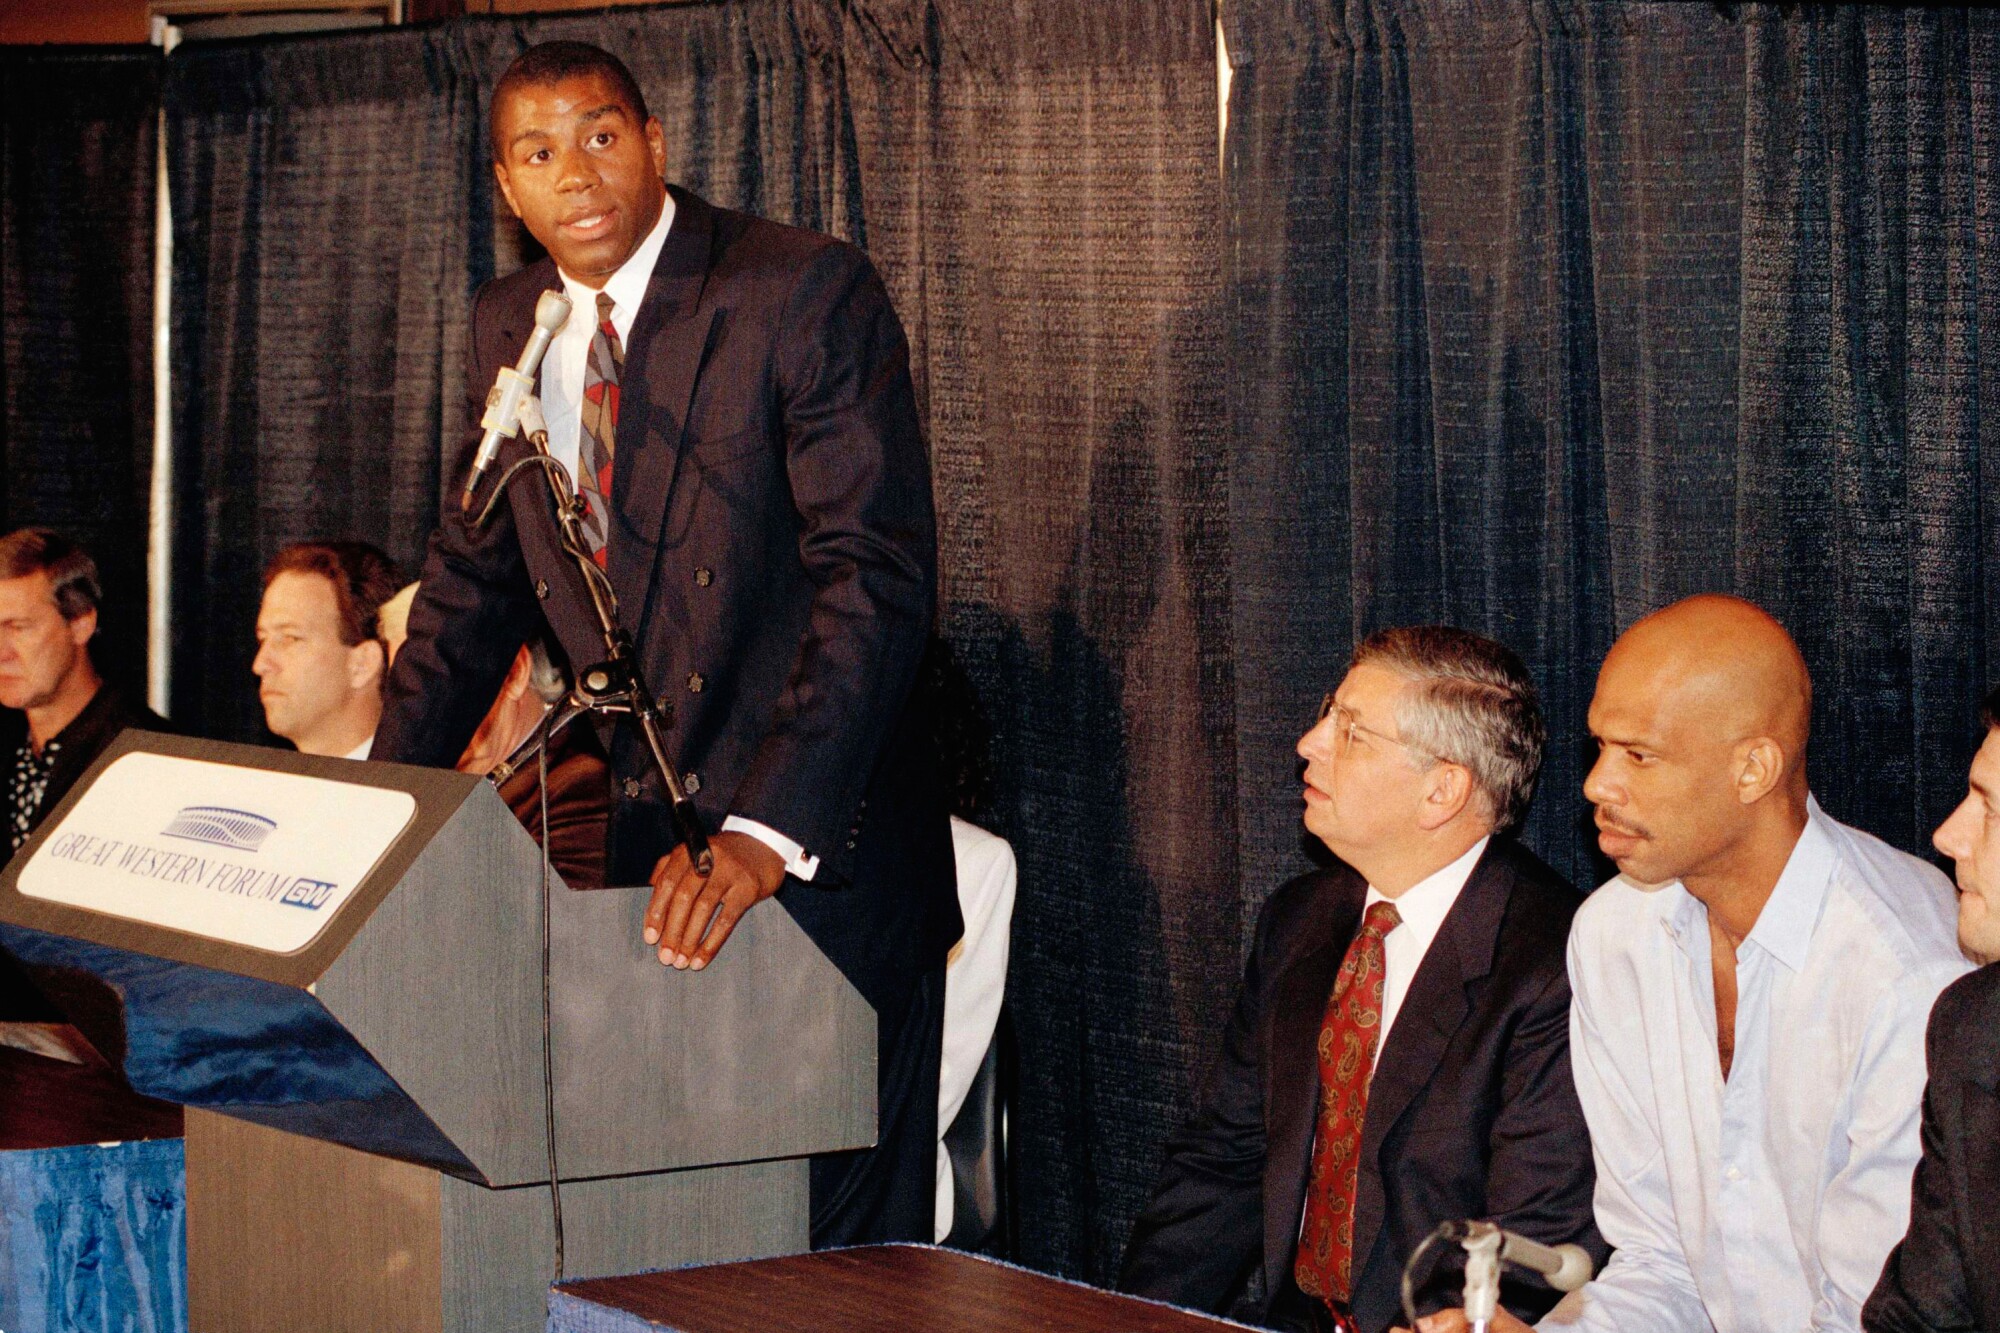 Magic Johnson stands at a podium